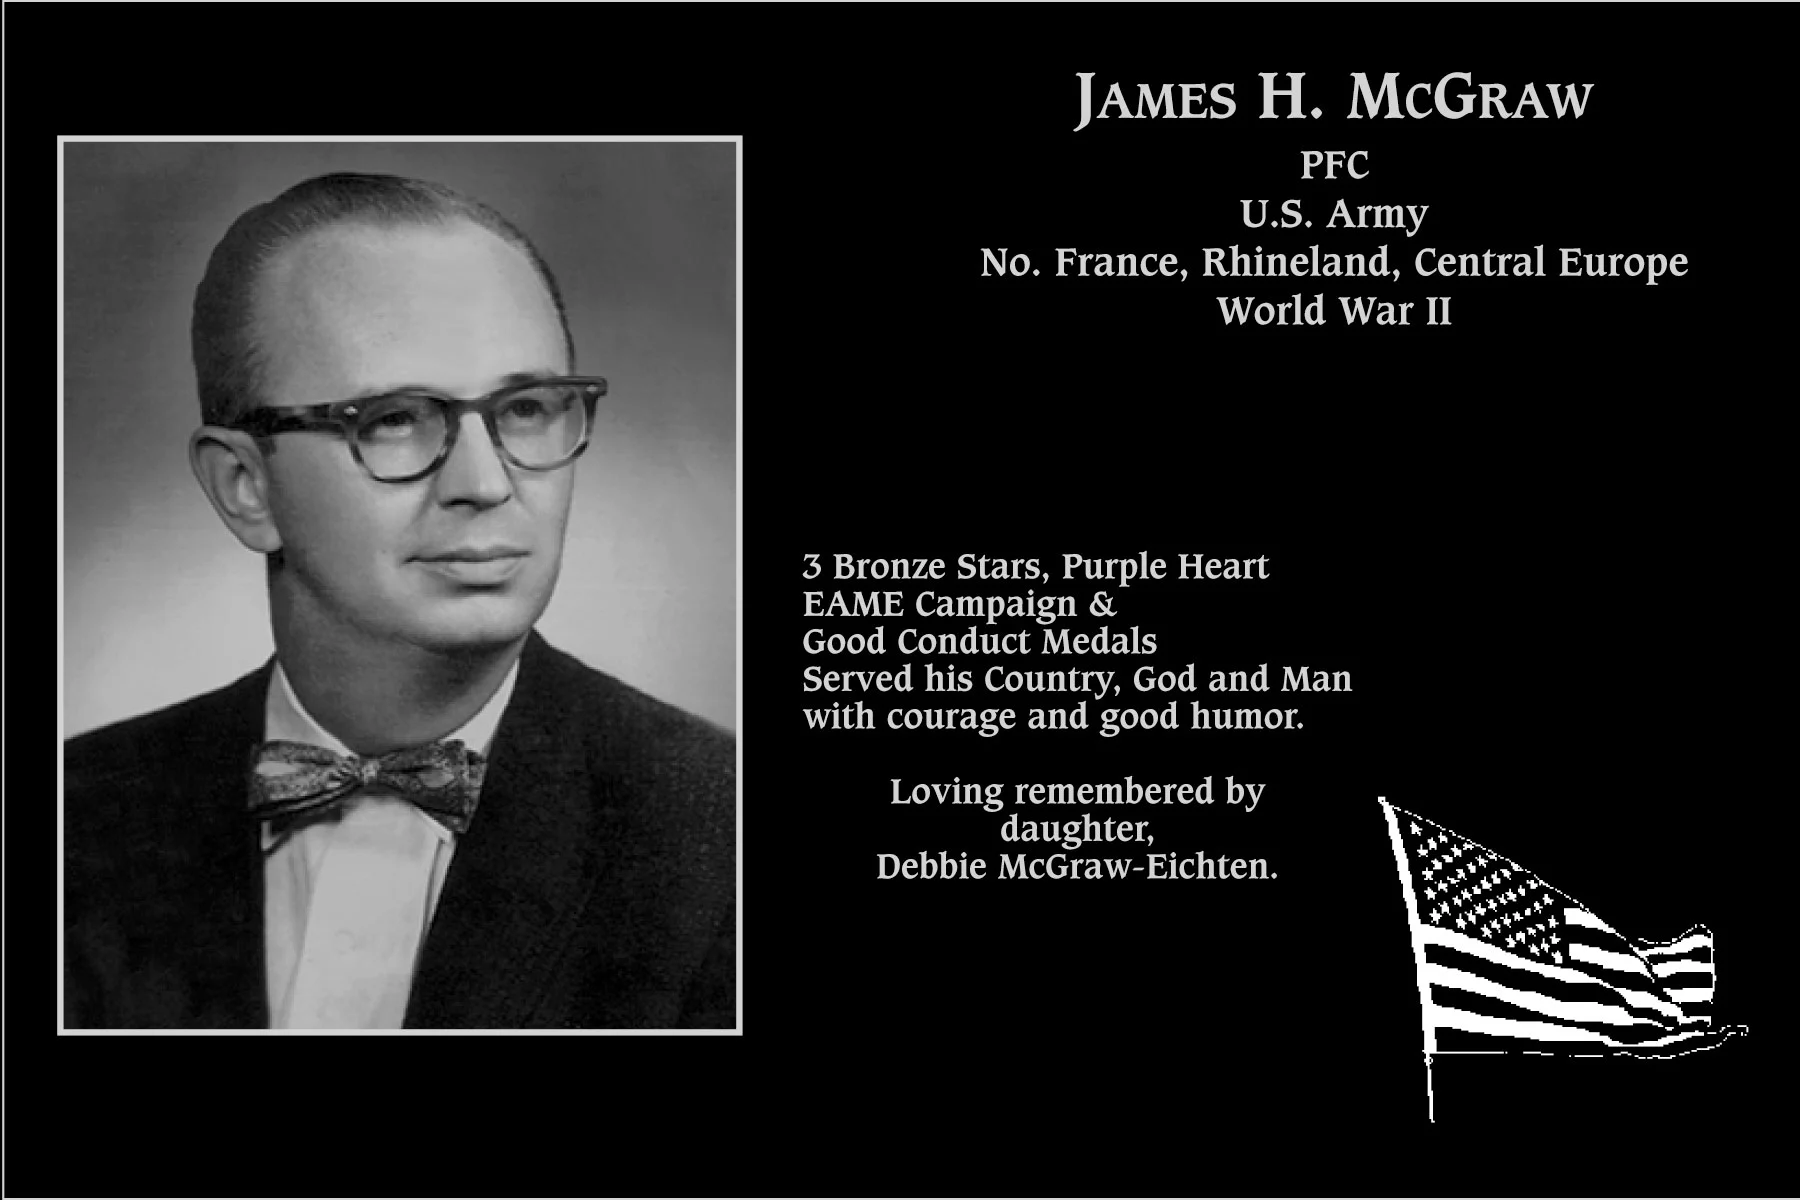 James H. McGraw